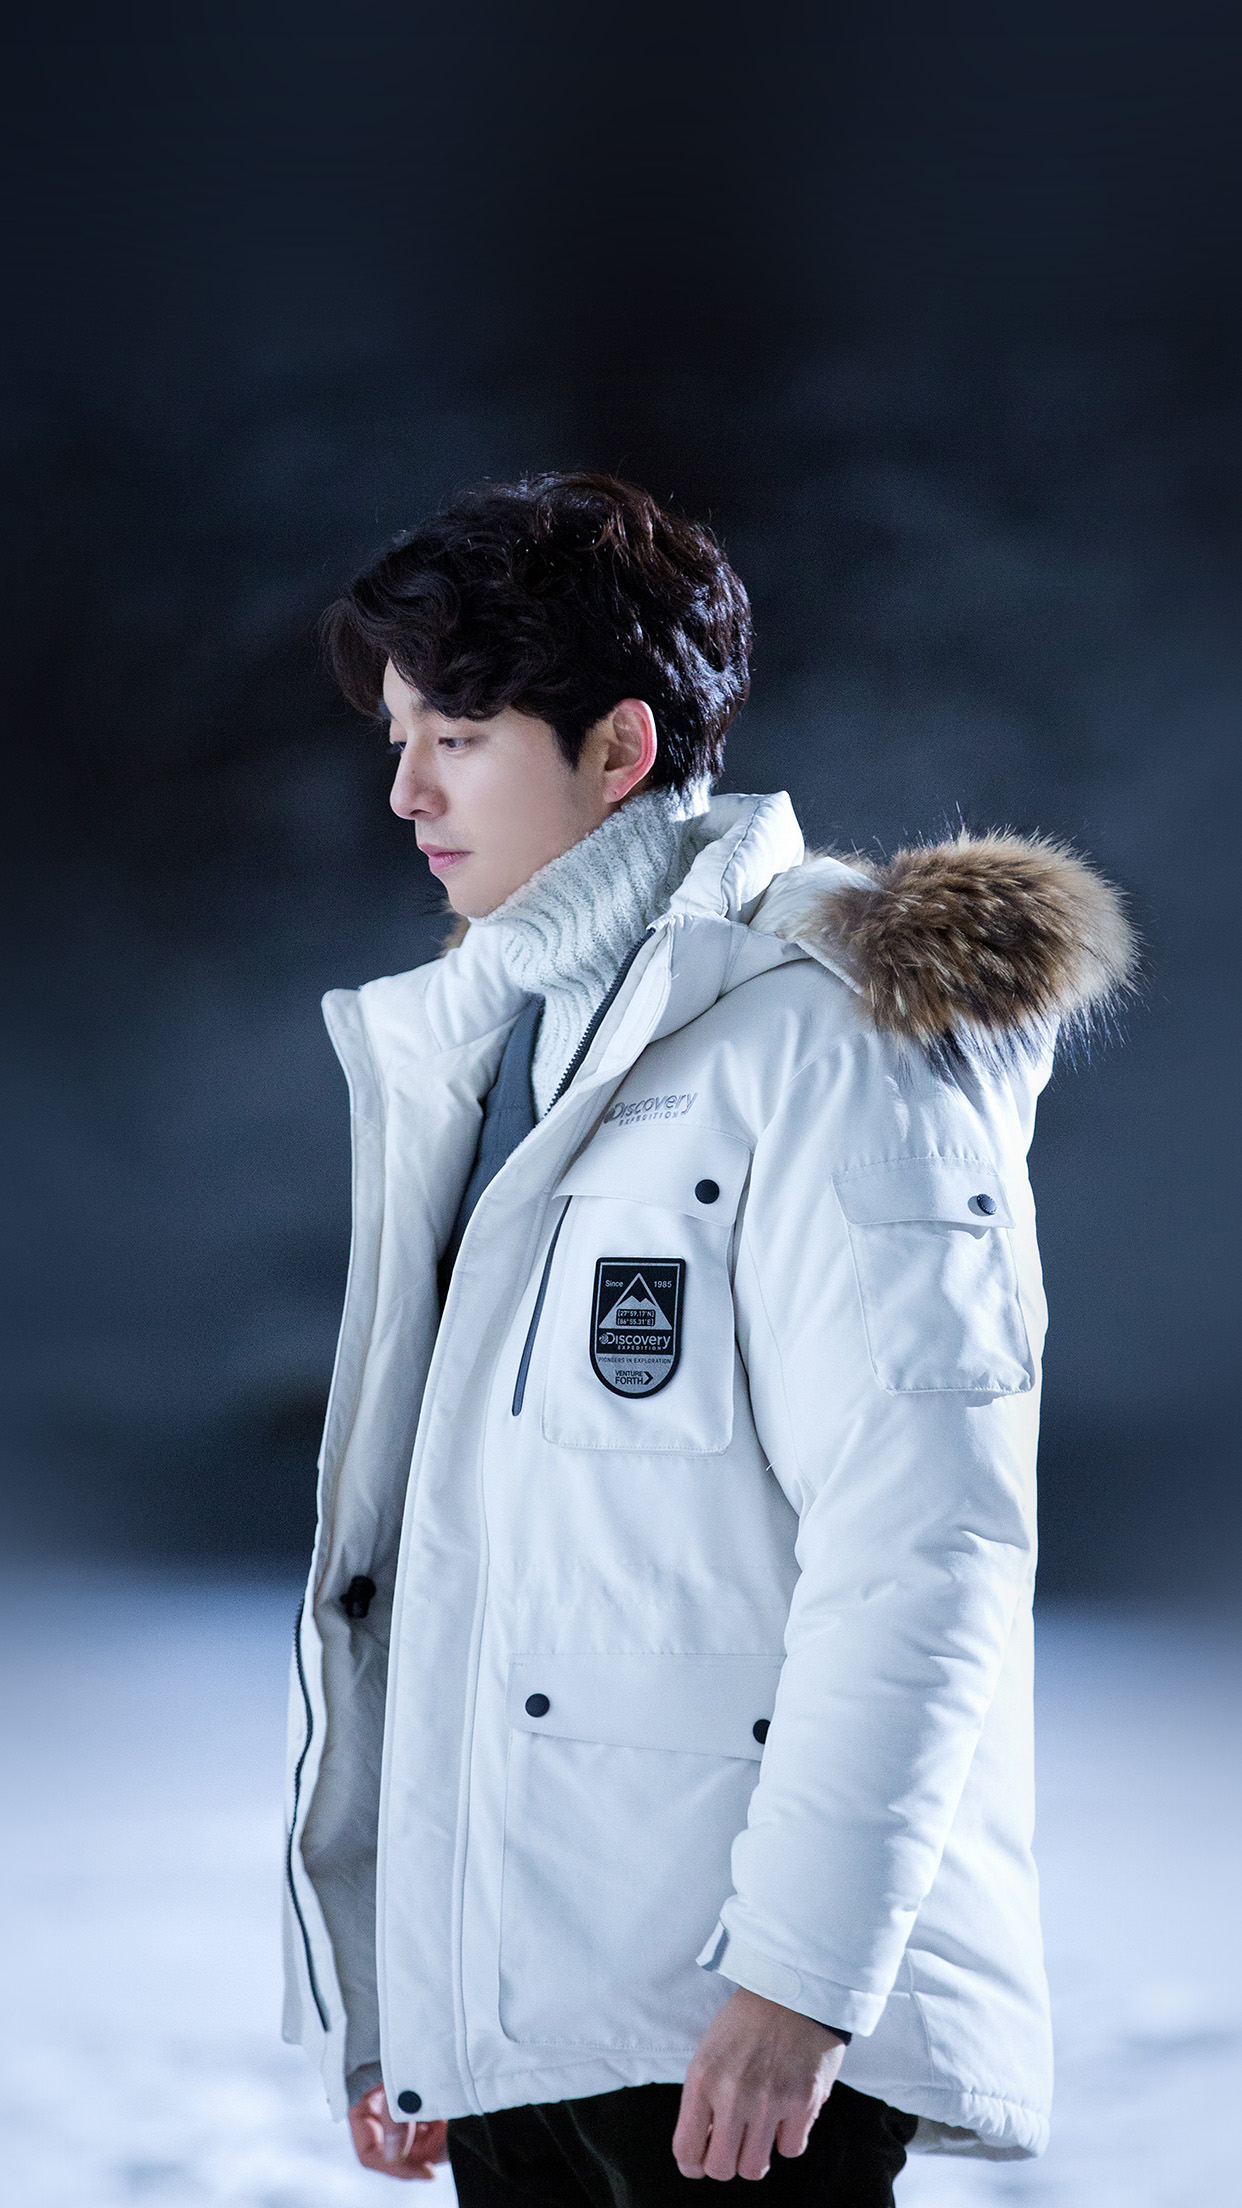 Gongyoo Winter Doggaebi Kpop Android wallpaper